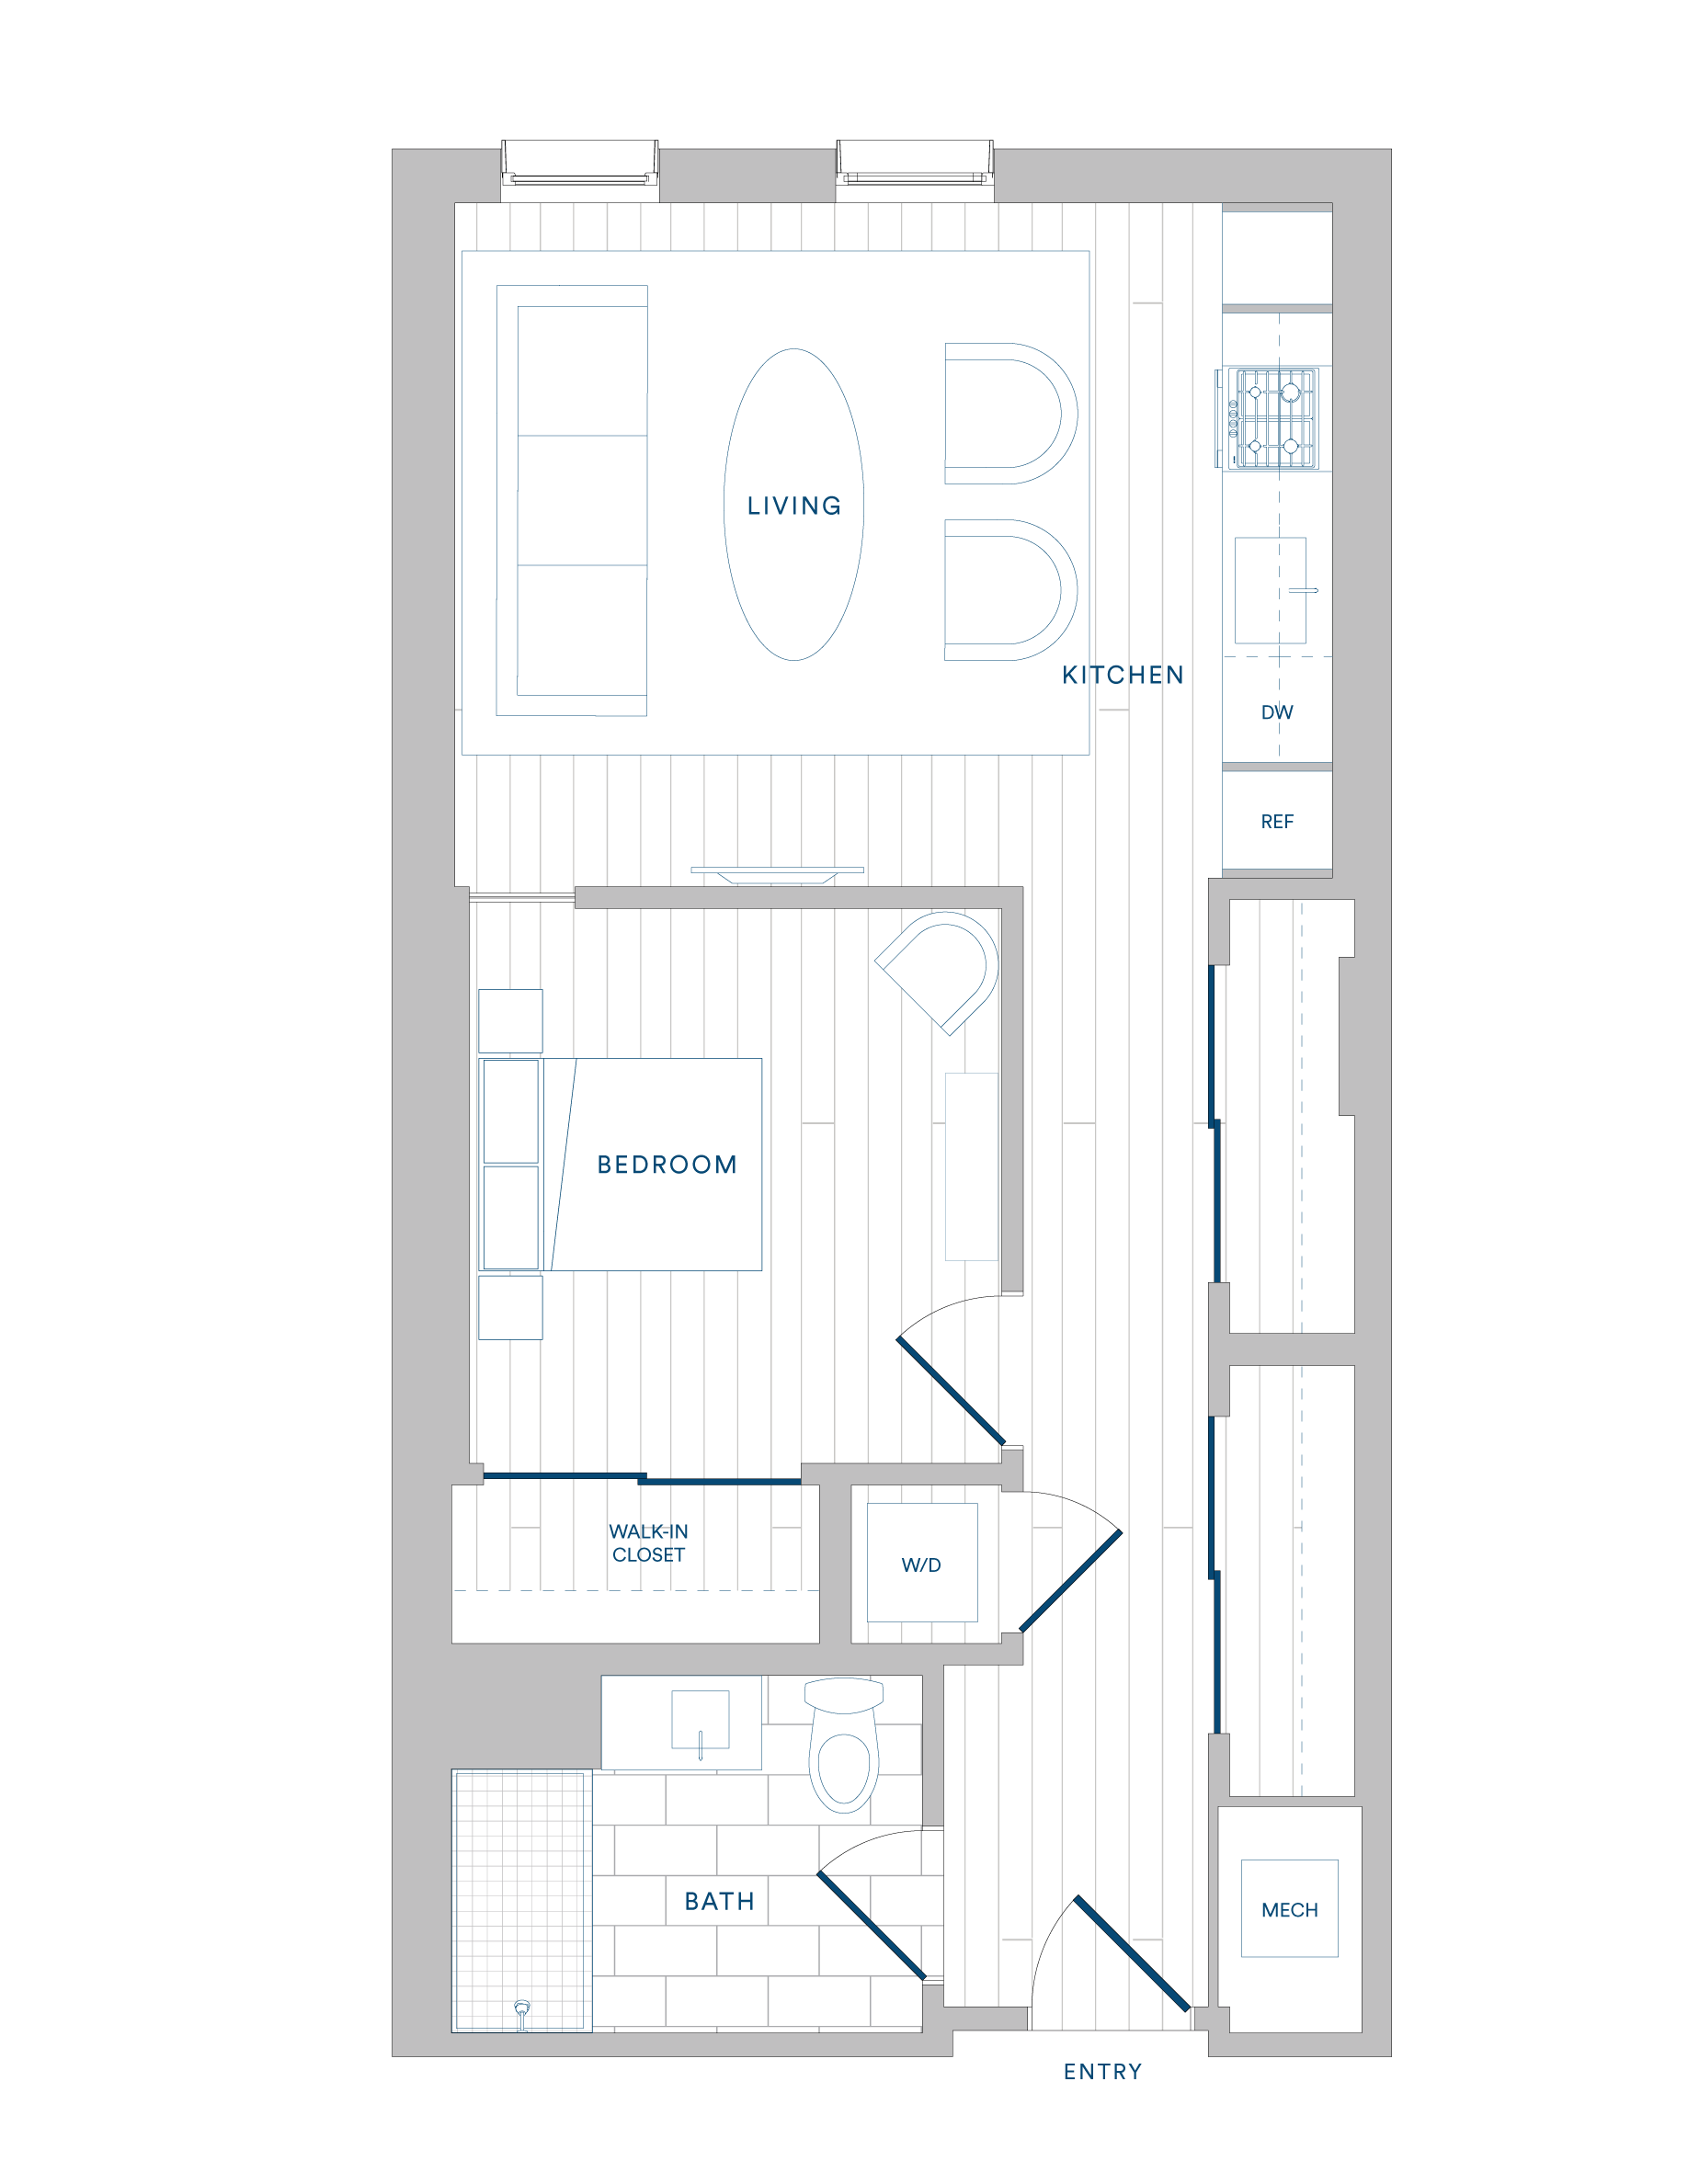 Floorplan for Apartment #202, 1 bedroom unit at Margarite